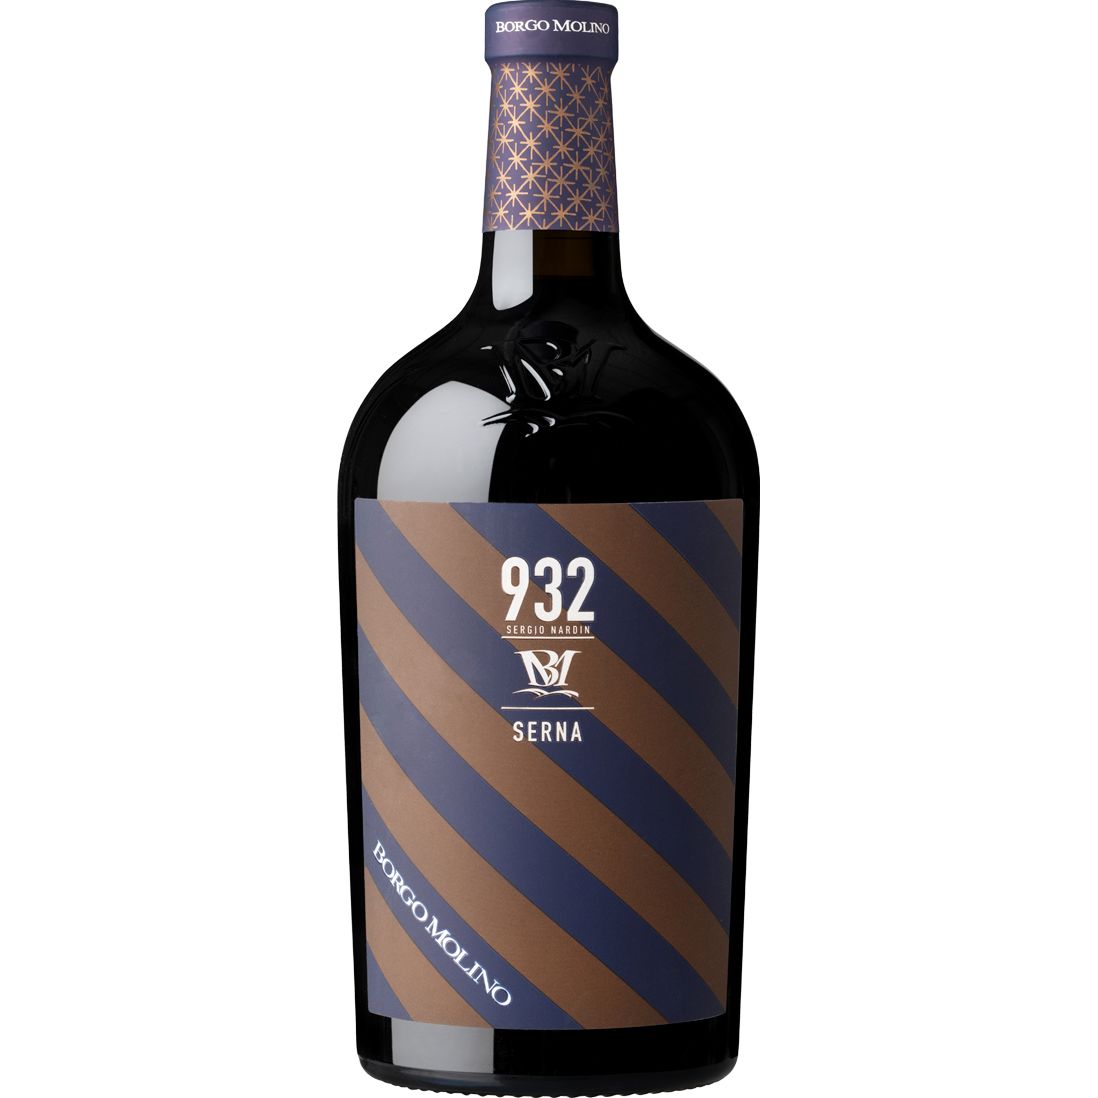 Вино Borgo Molino 932 Serna Rosso Barrique IGT, червоне, сухе, 0,75 л - фото 1